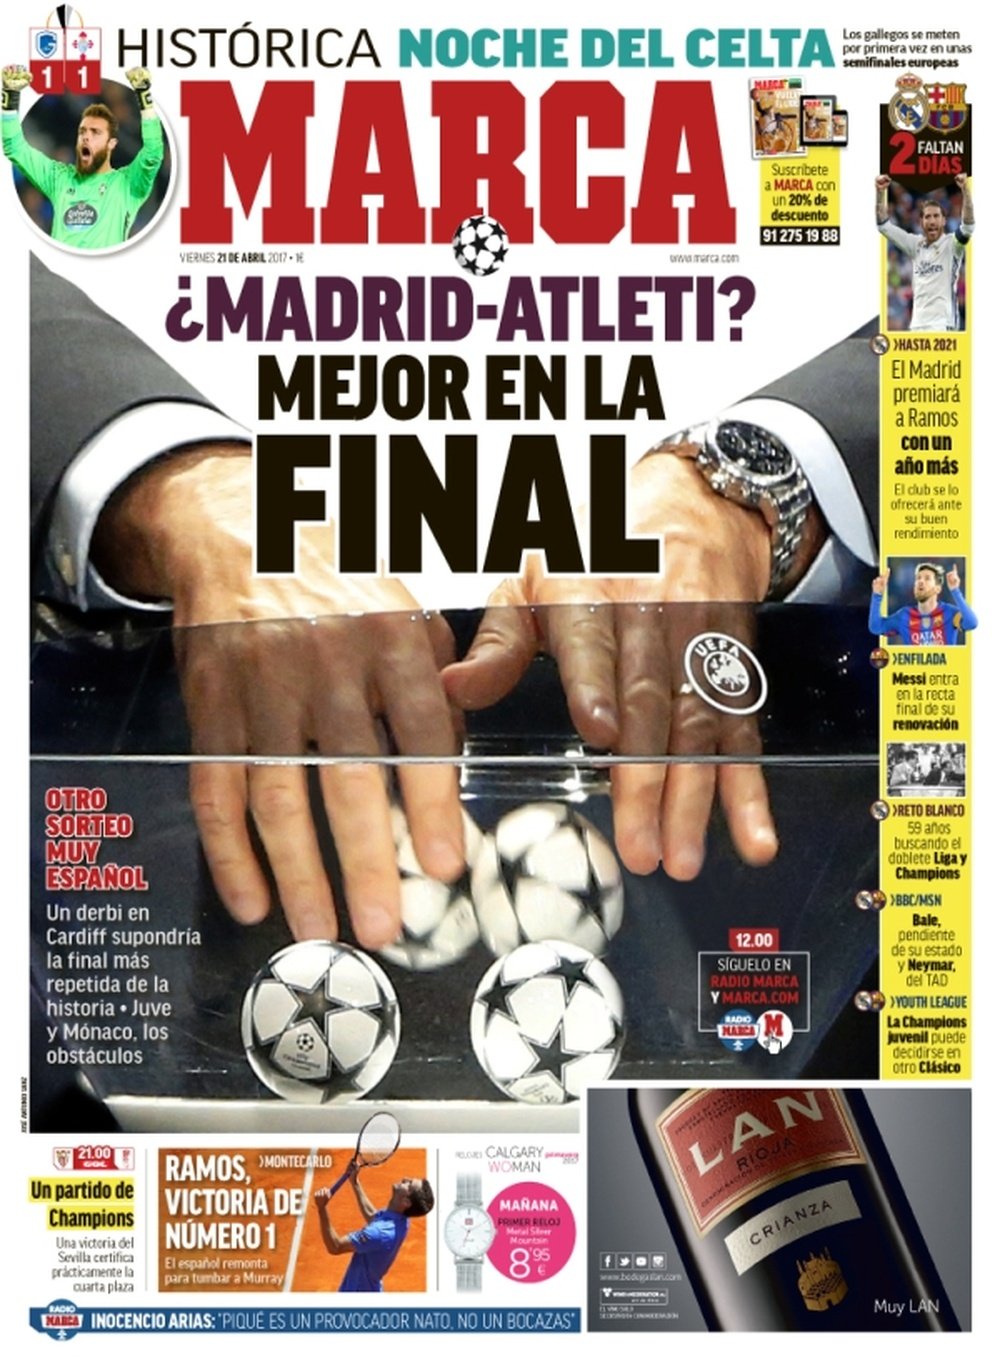 La Une du quotidien sportif espagnol 'Marca' du 21 avril 2017. Marca